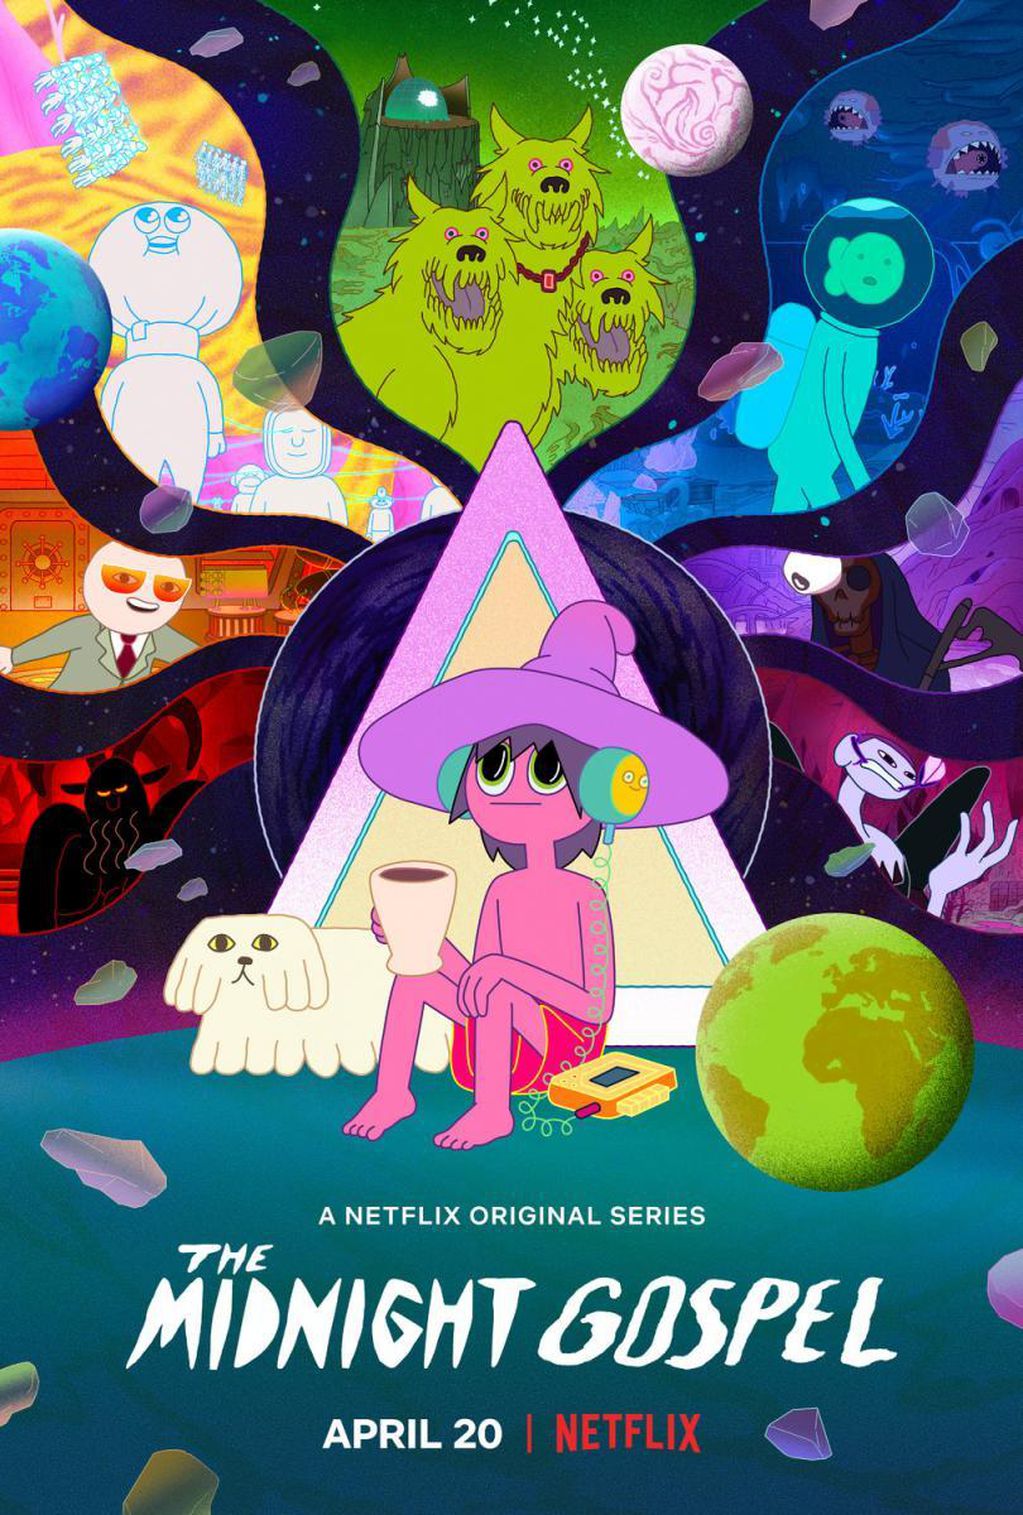 "The midnight gospel" la serie animada para adultos que fue cancelada por Netflix.